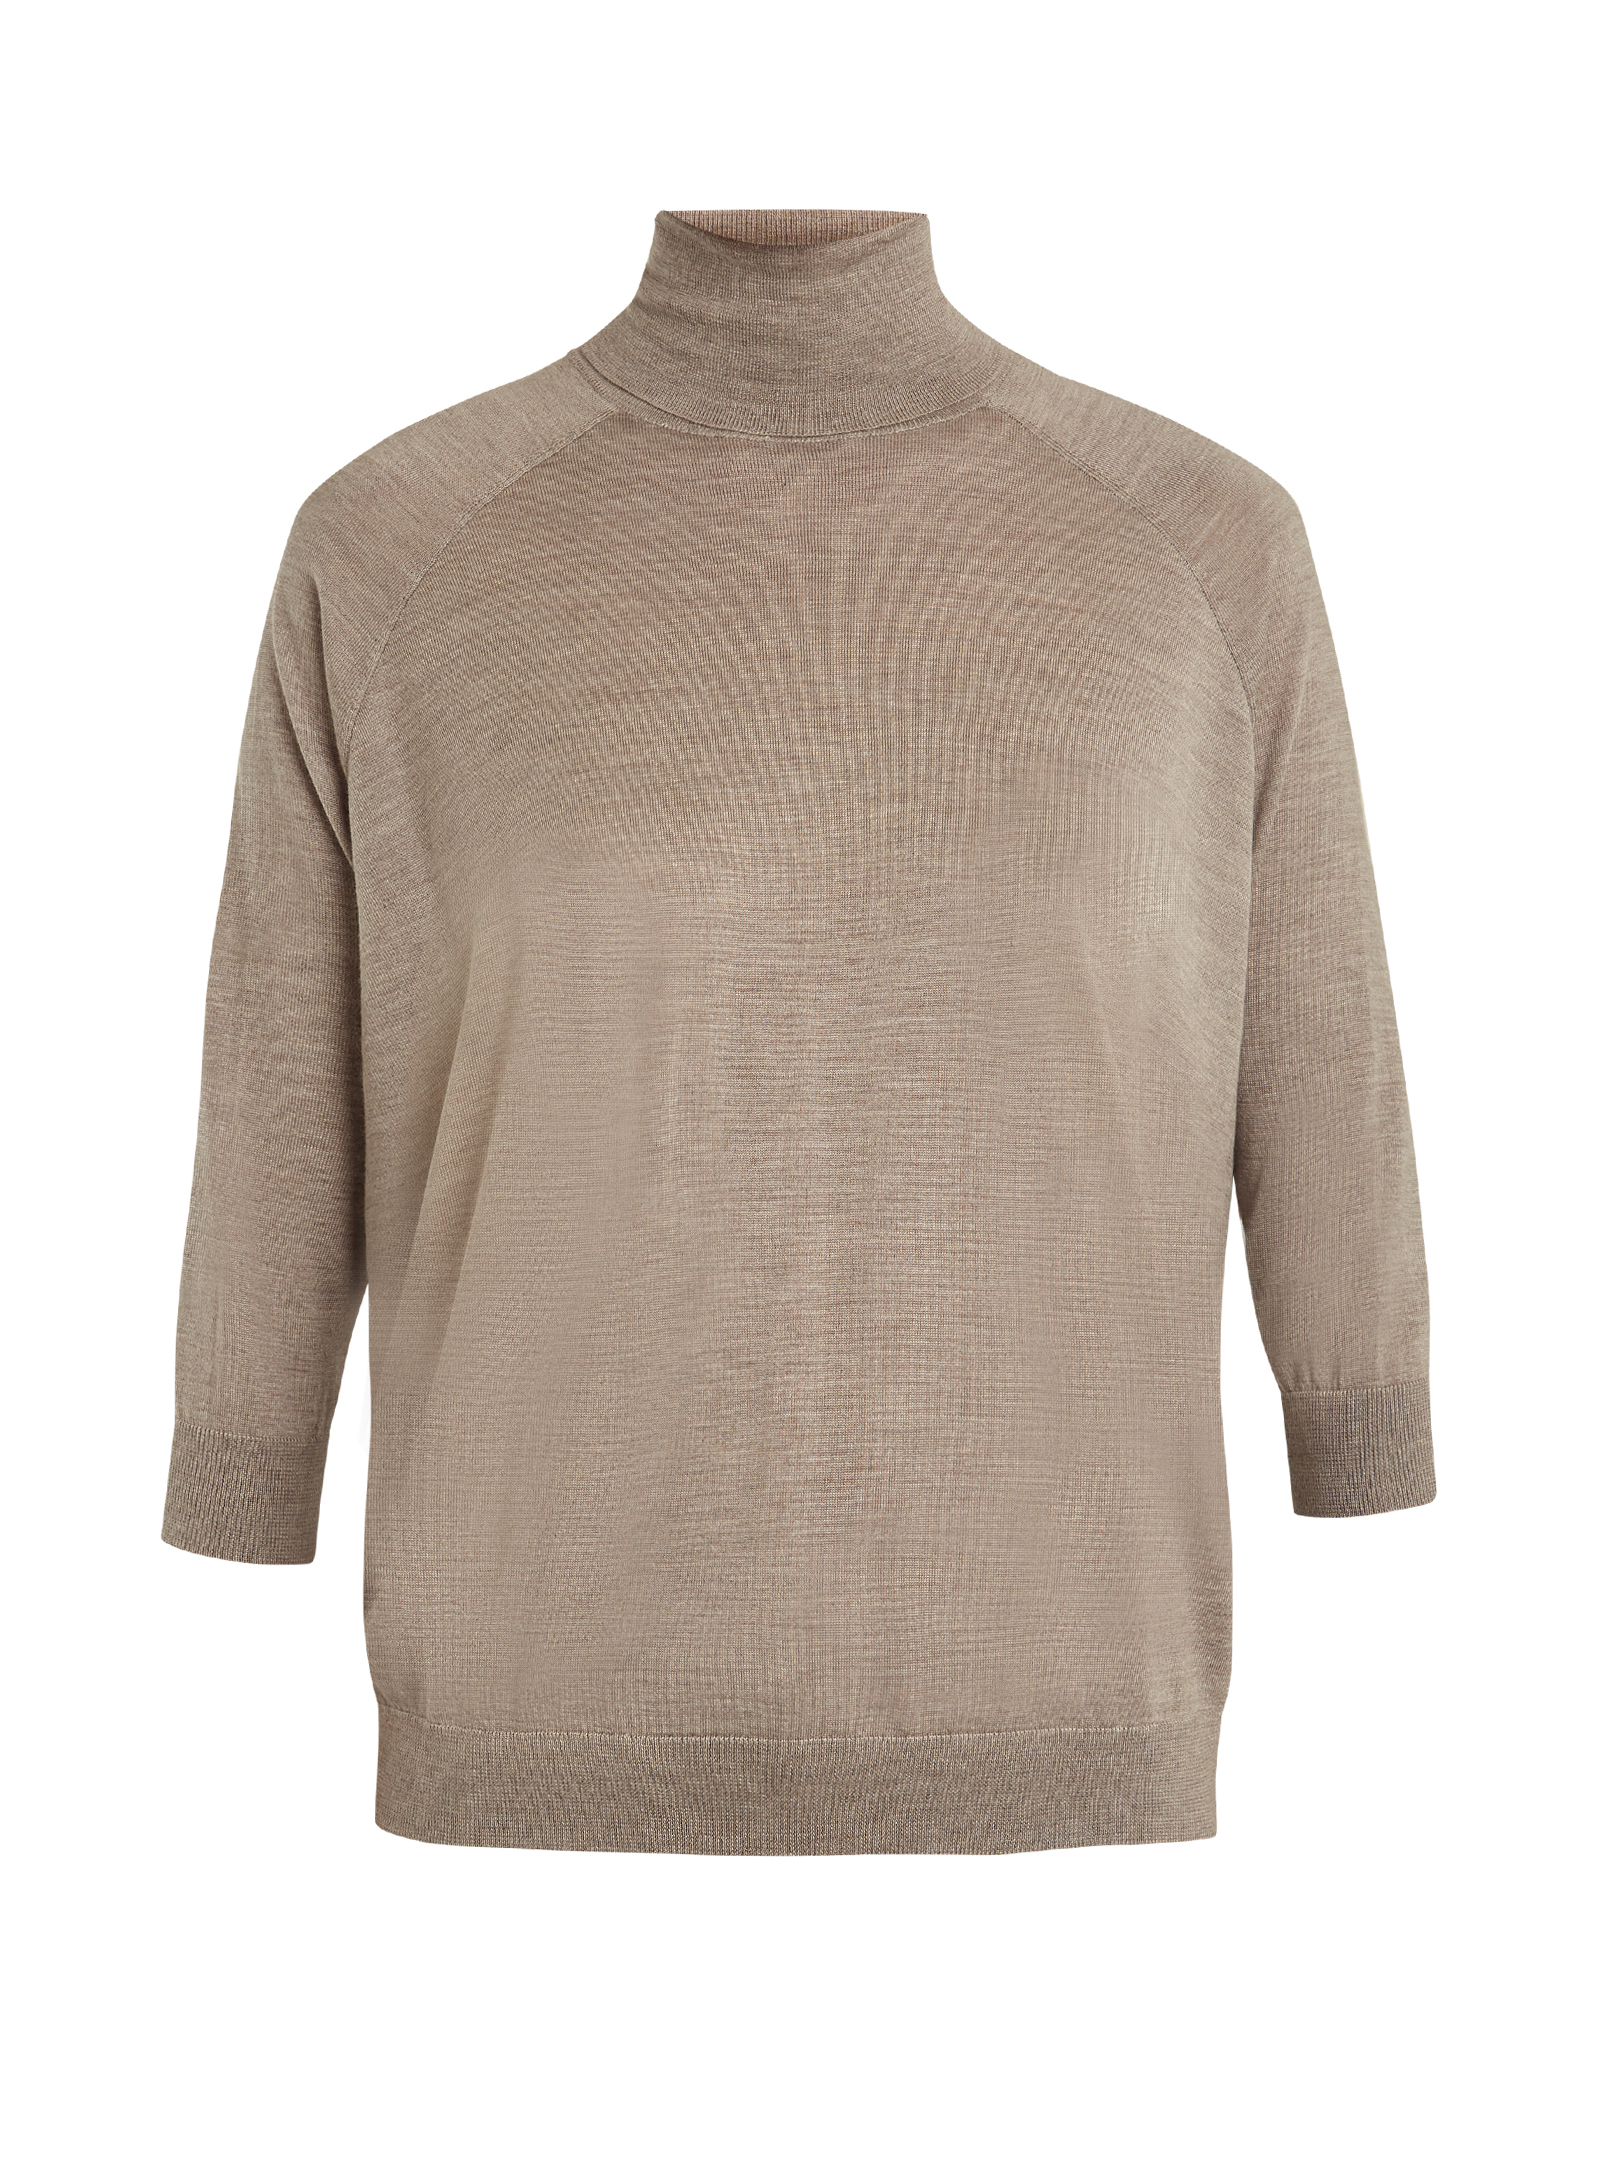 Brunello Cucinelli - Roll-Neck Cashmere-Blend Sweater | FASHION STYLE FAN